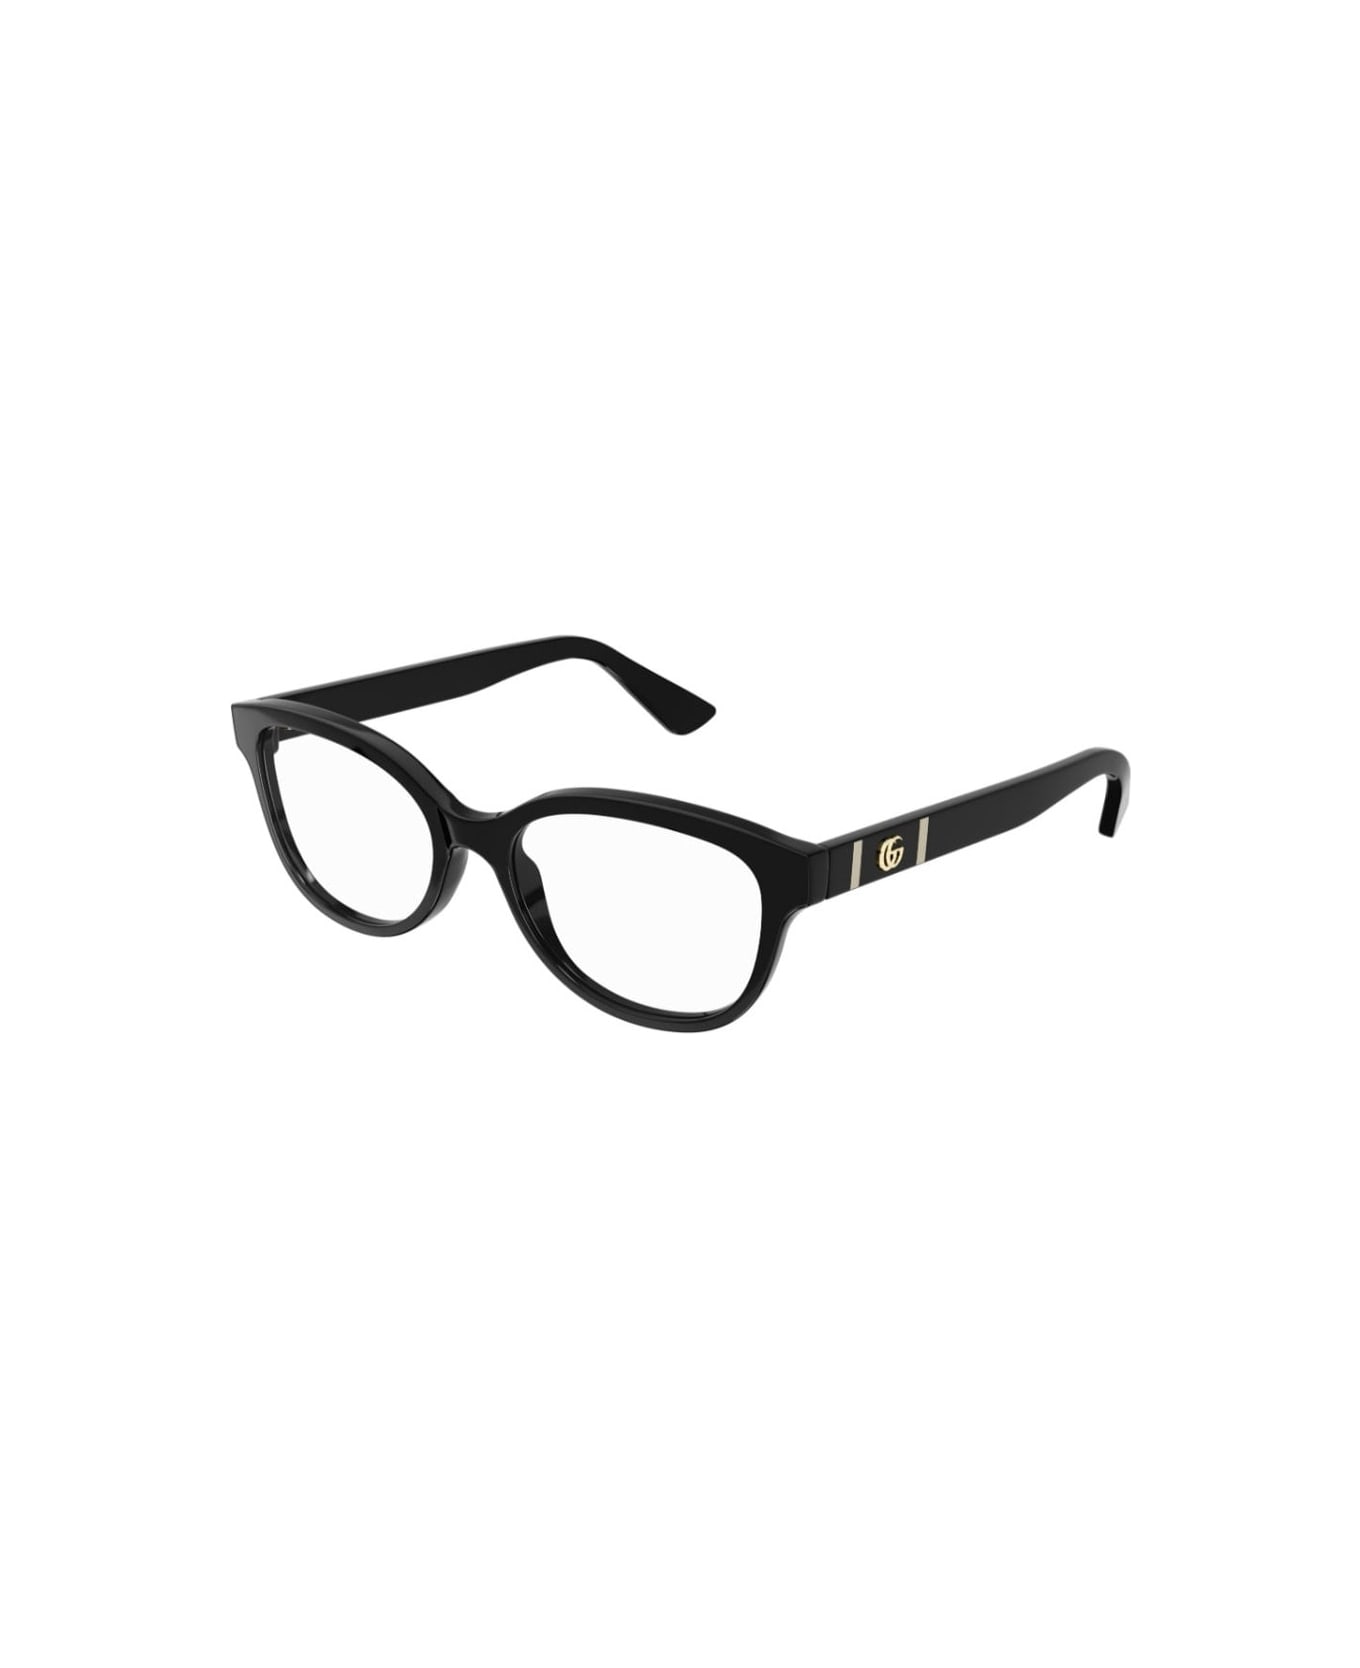 Gucci Eyewear GG1115 001 Glasses - Nero アイウェア